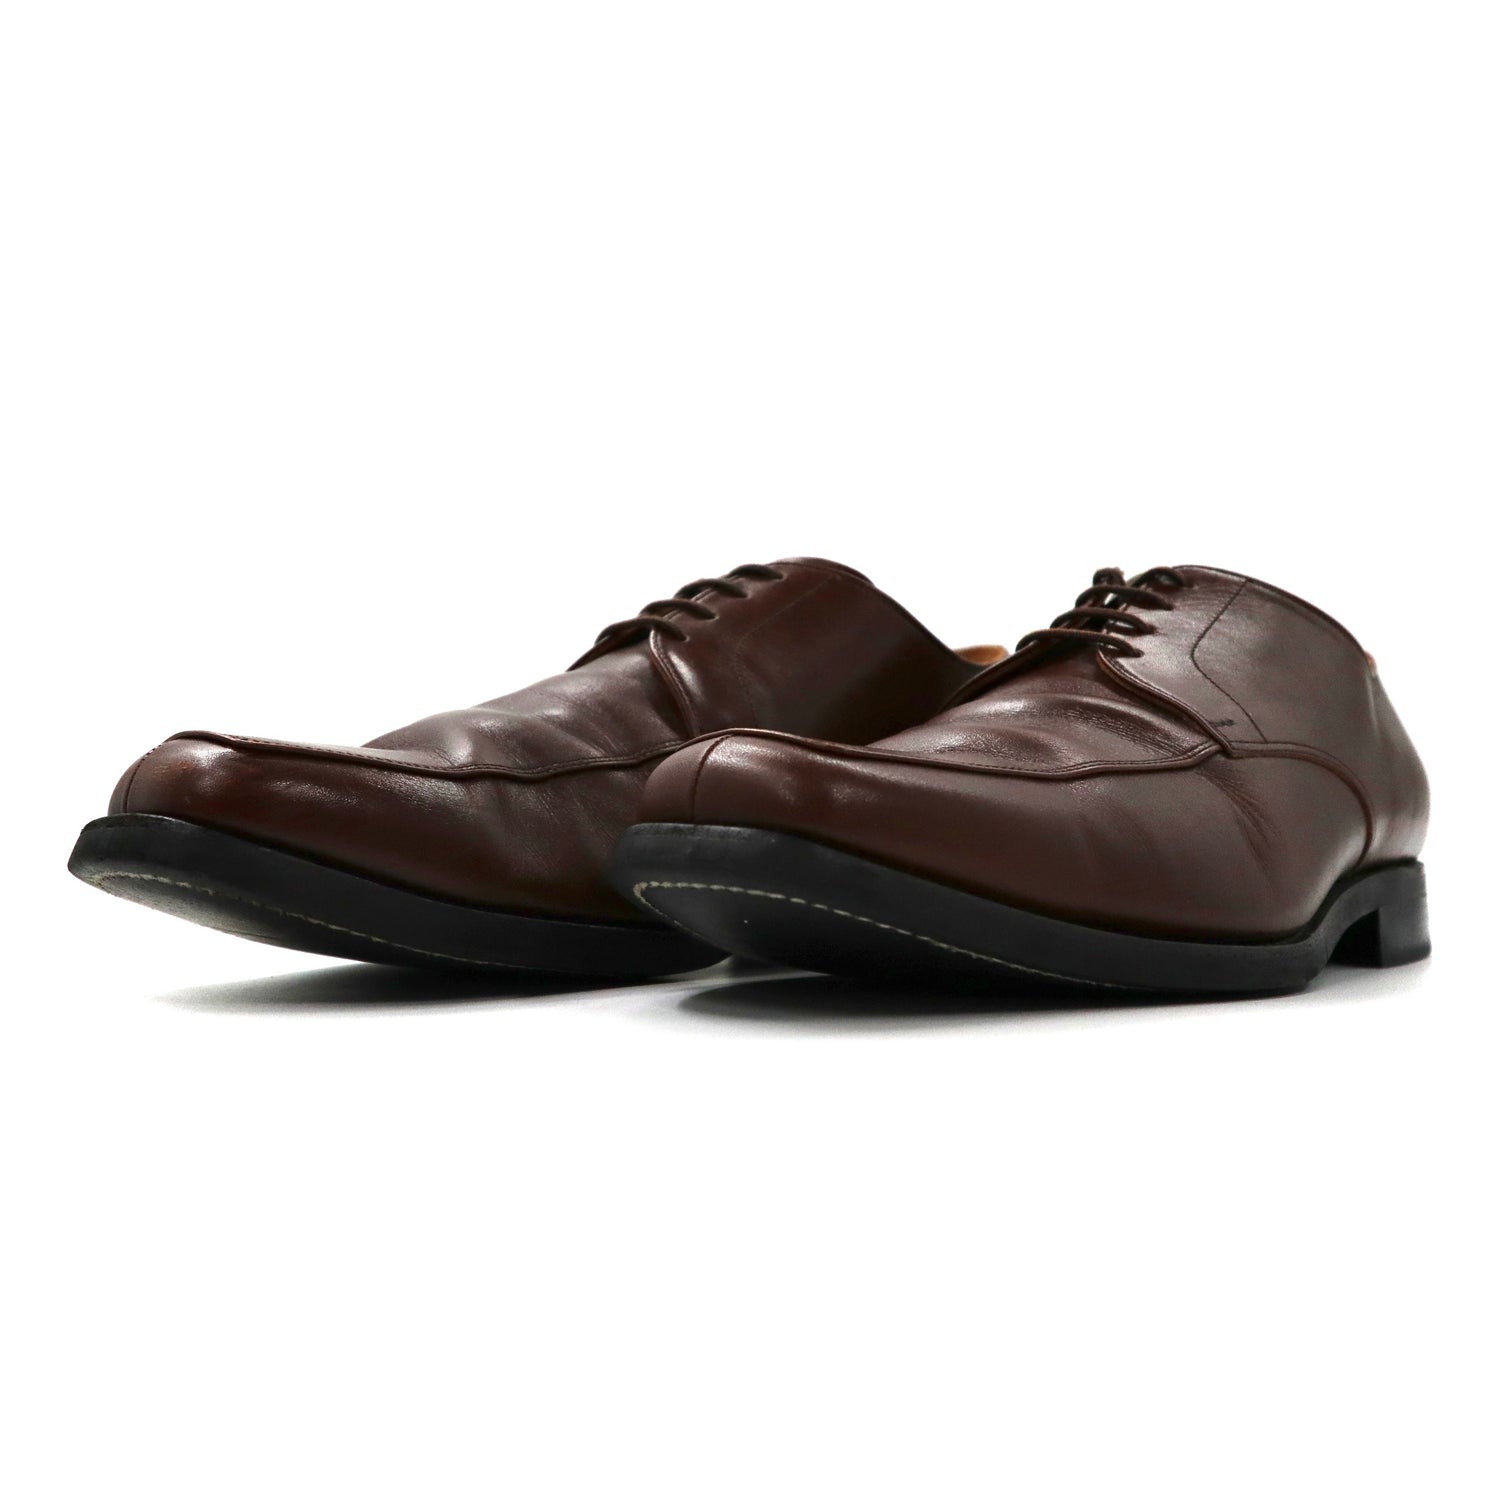 Scotch GRAIN Dress Shoes US7.5 Brown Leather Square Tou F-0374 